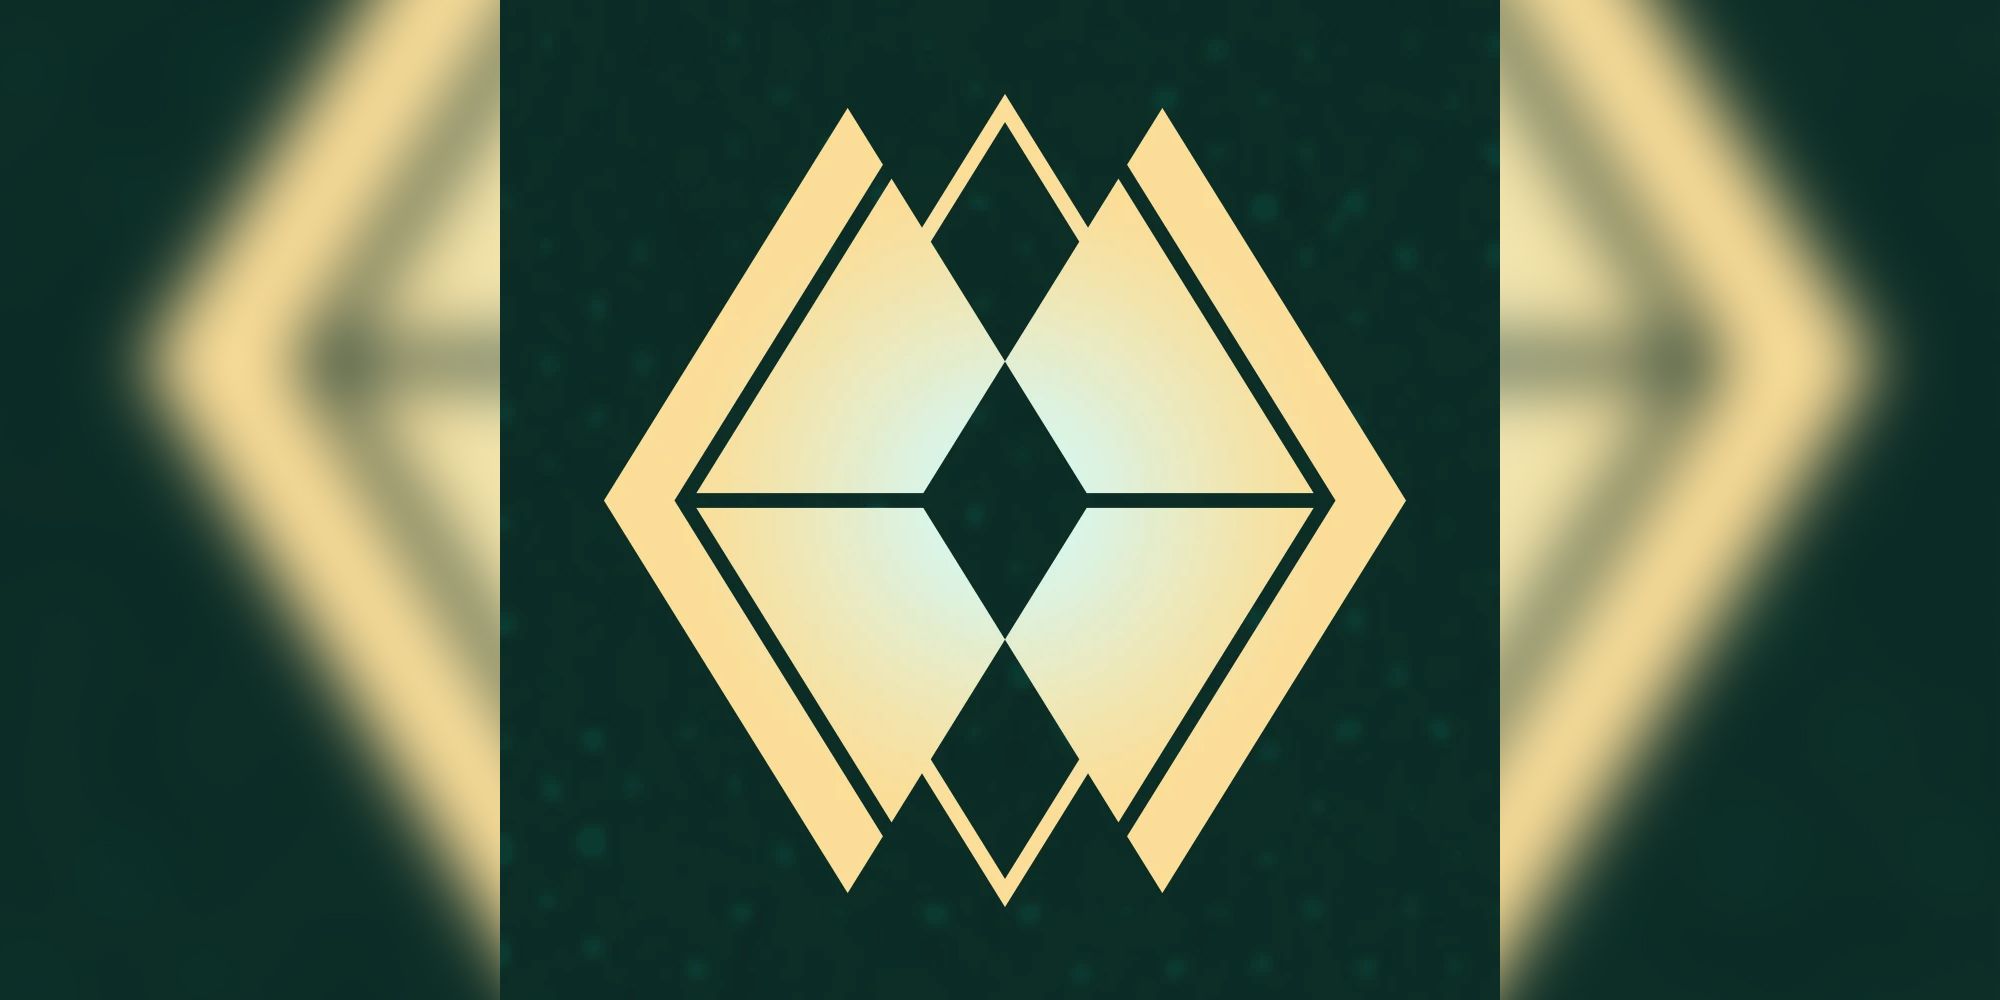 destiny 2 free emblem codes 2020